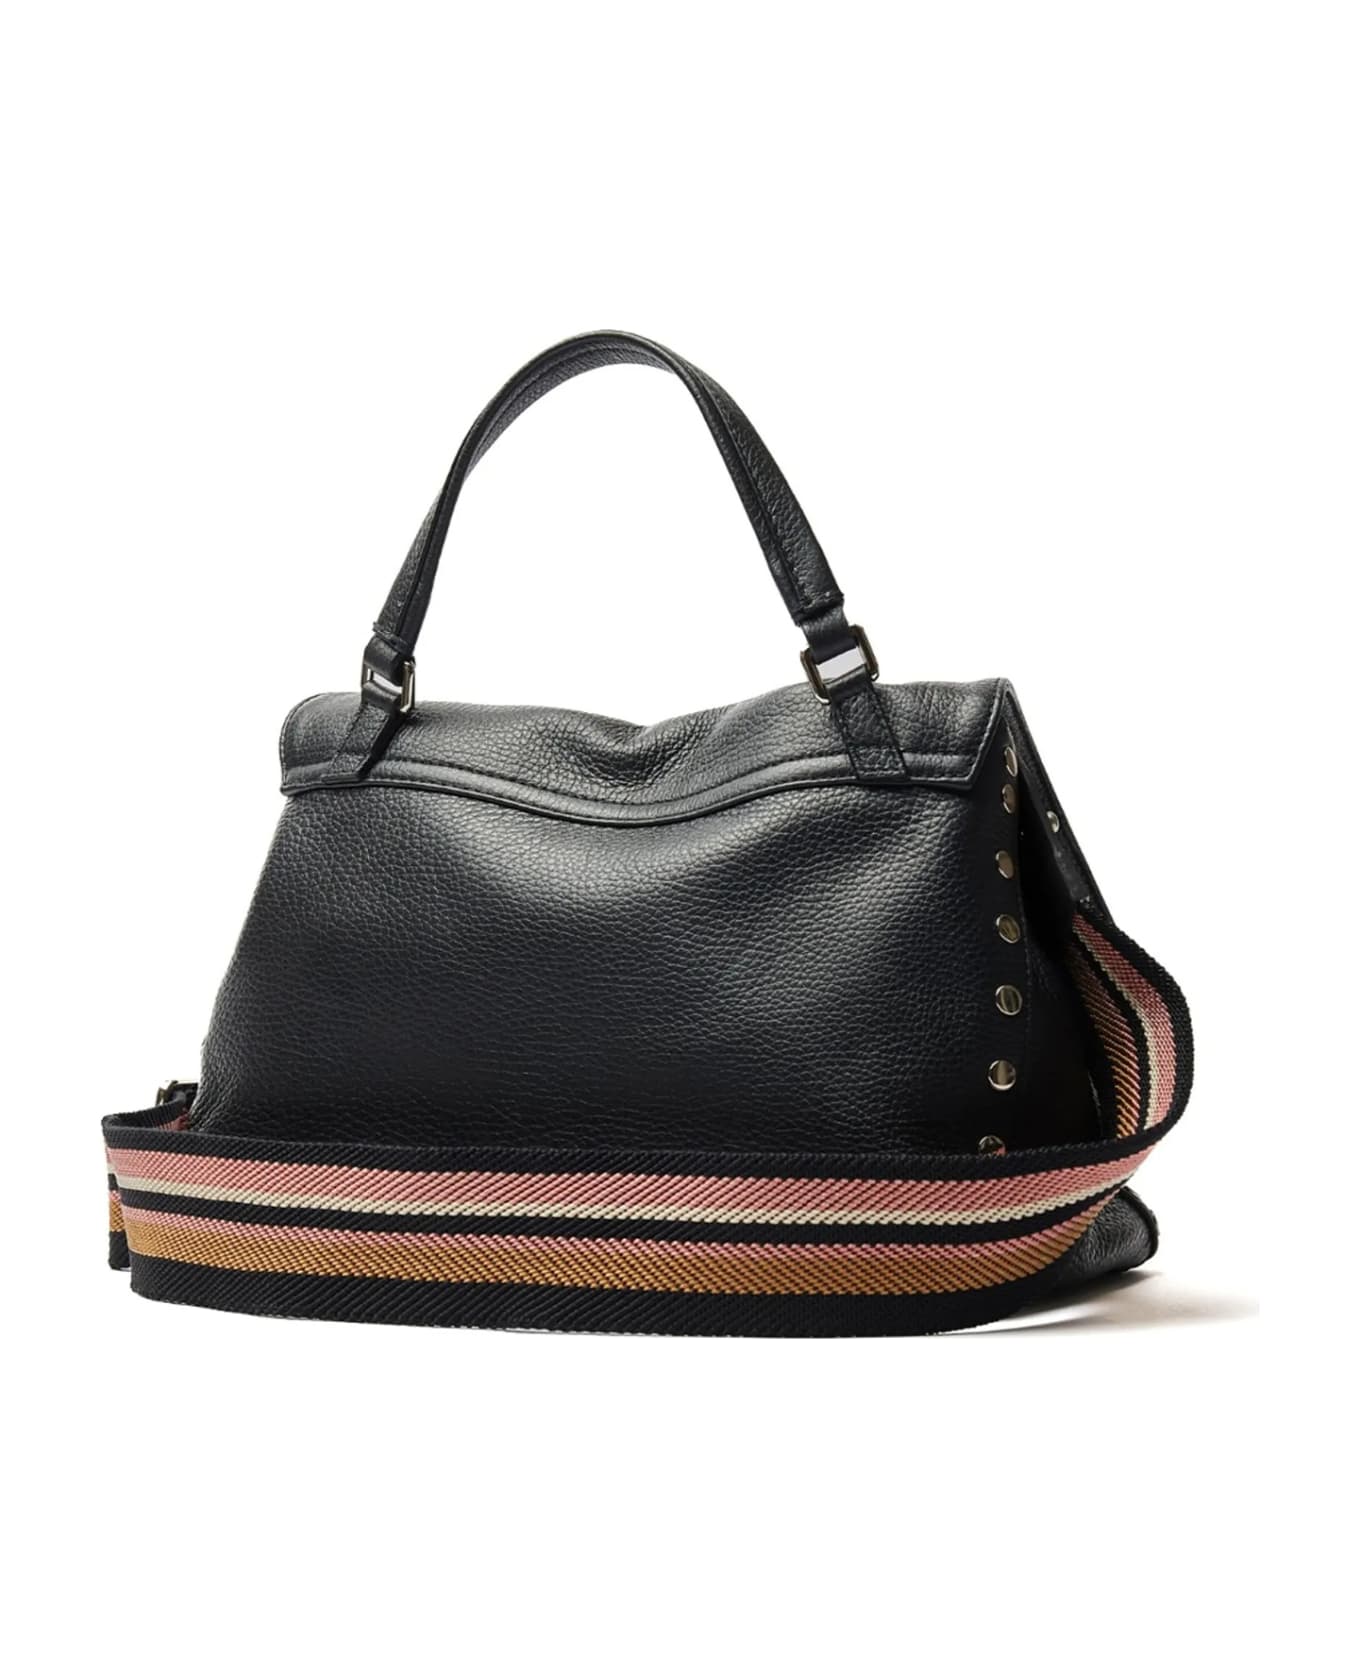 Zanellato Postina Daily Day Leather Bag With Shoulder Strap - NERO